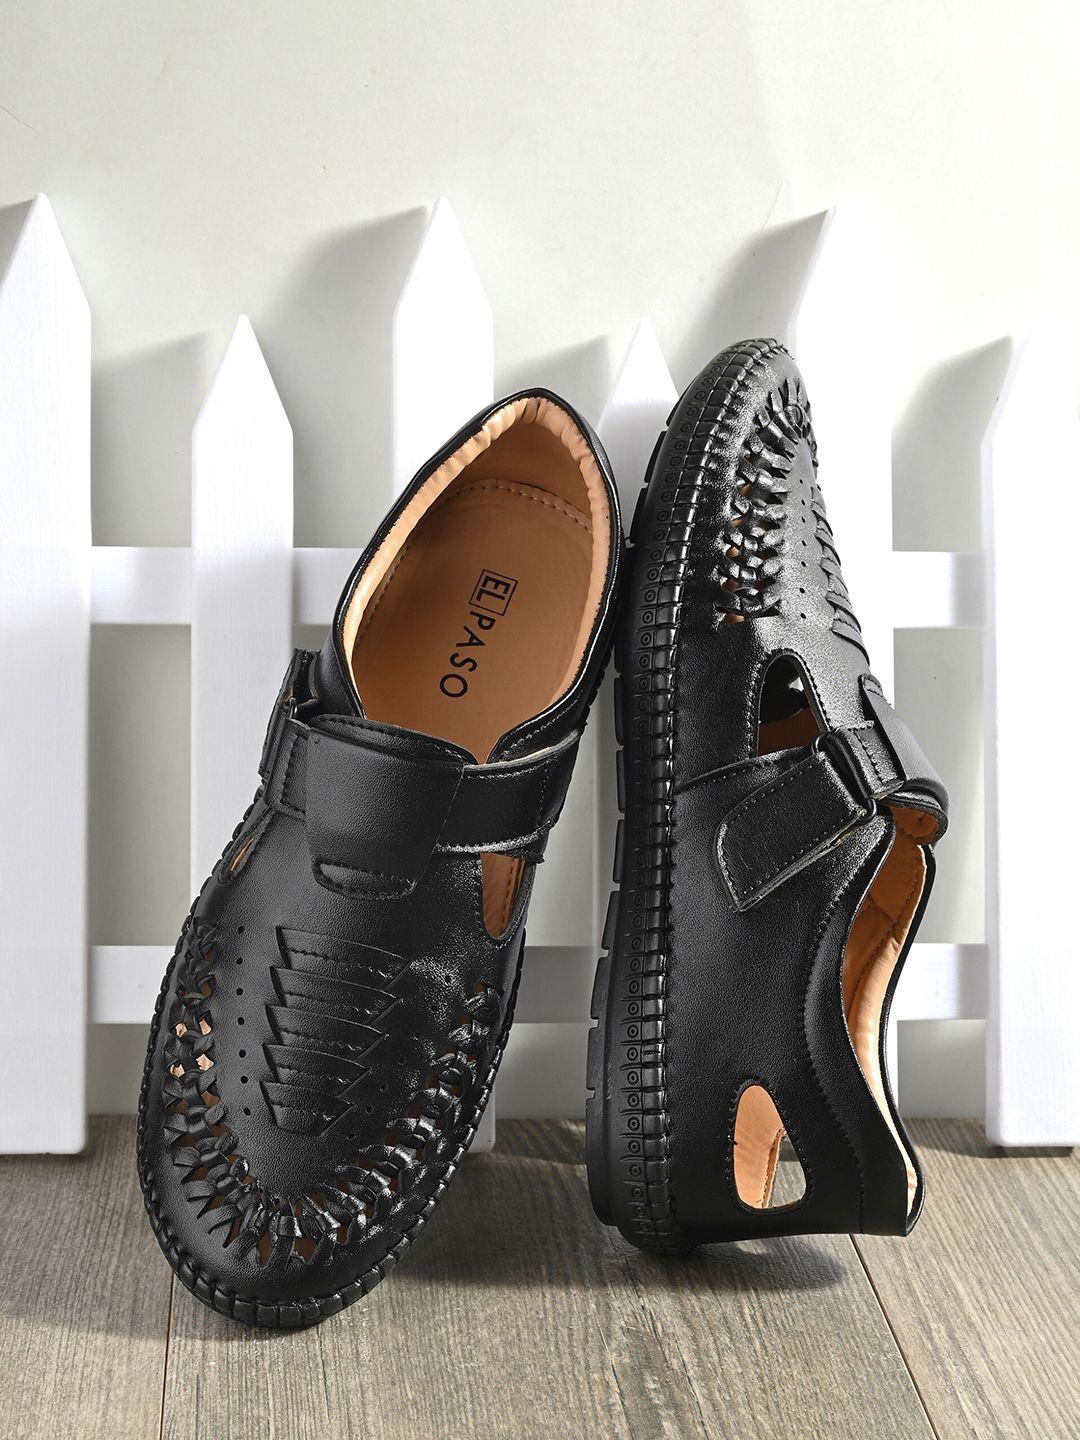 el-paso-men-textured-ethnic-shoe-style-sandals